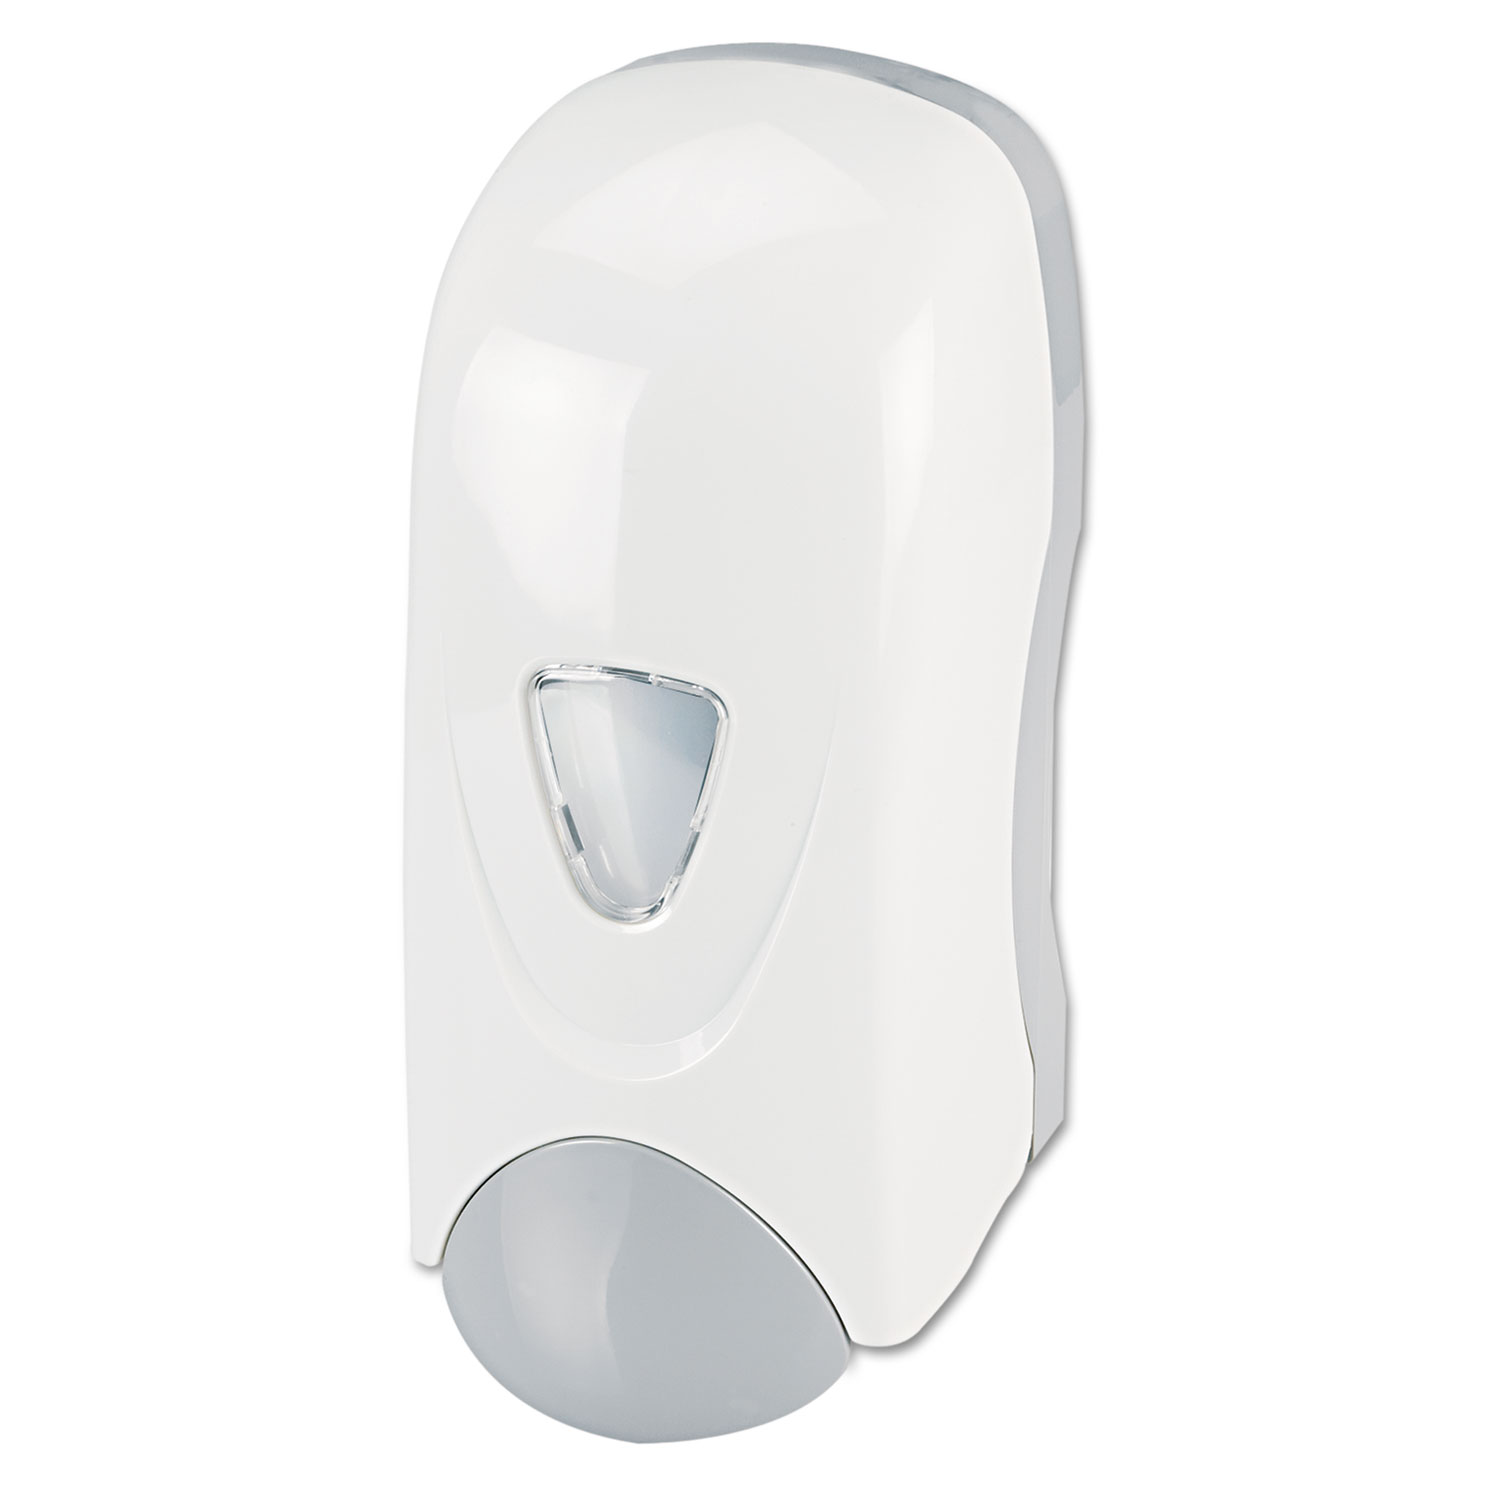  Impact IMP 9325 Foam-eeze Bulk Foam Soap Dispenser with Refillable Bottle, 1000 mL, 4.88 x 4.75 x 11, White/Gray (IMP9325) 